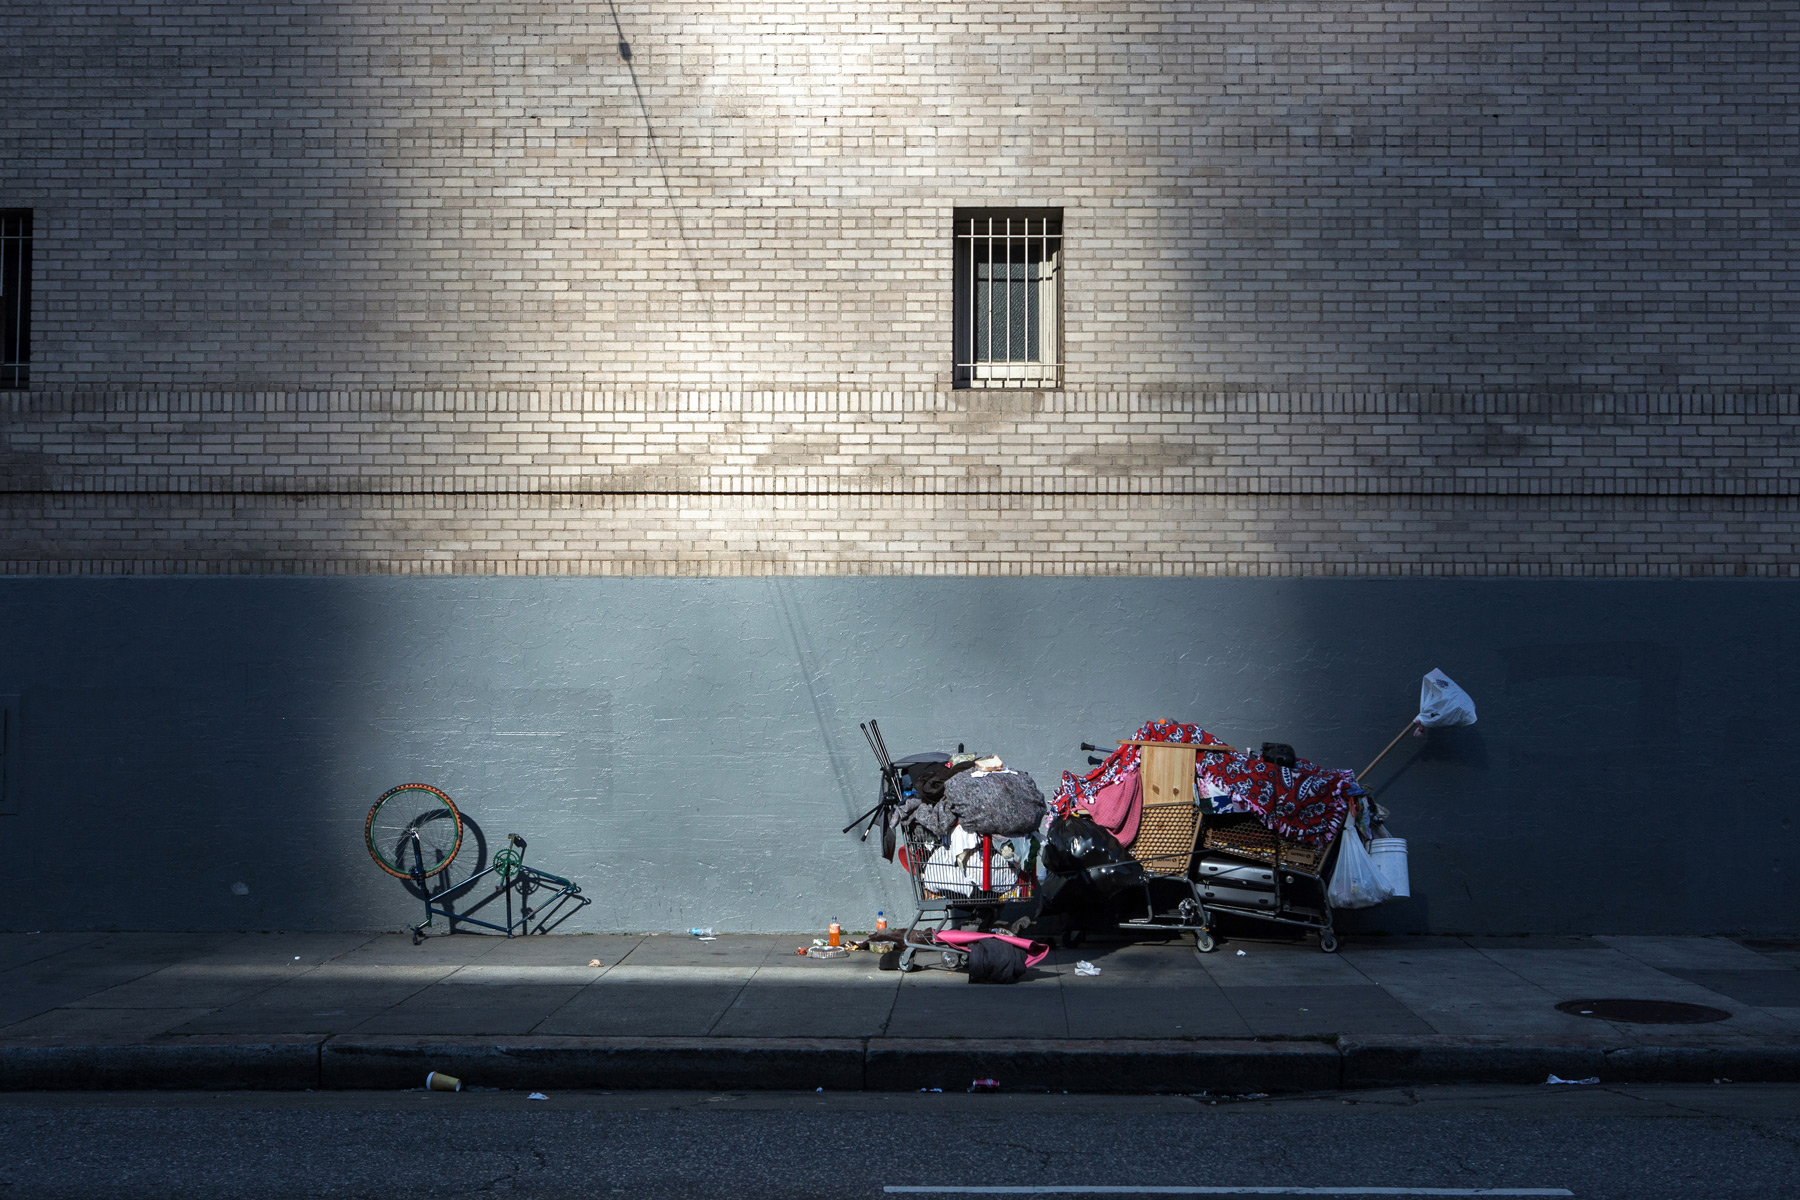 A person's belongings on the sidewalk, San Francisco